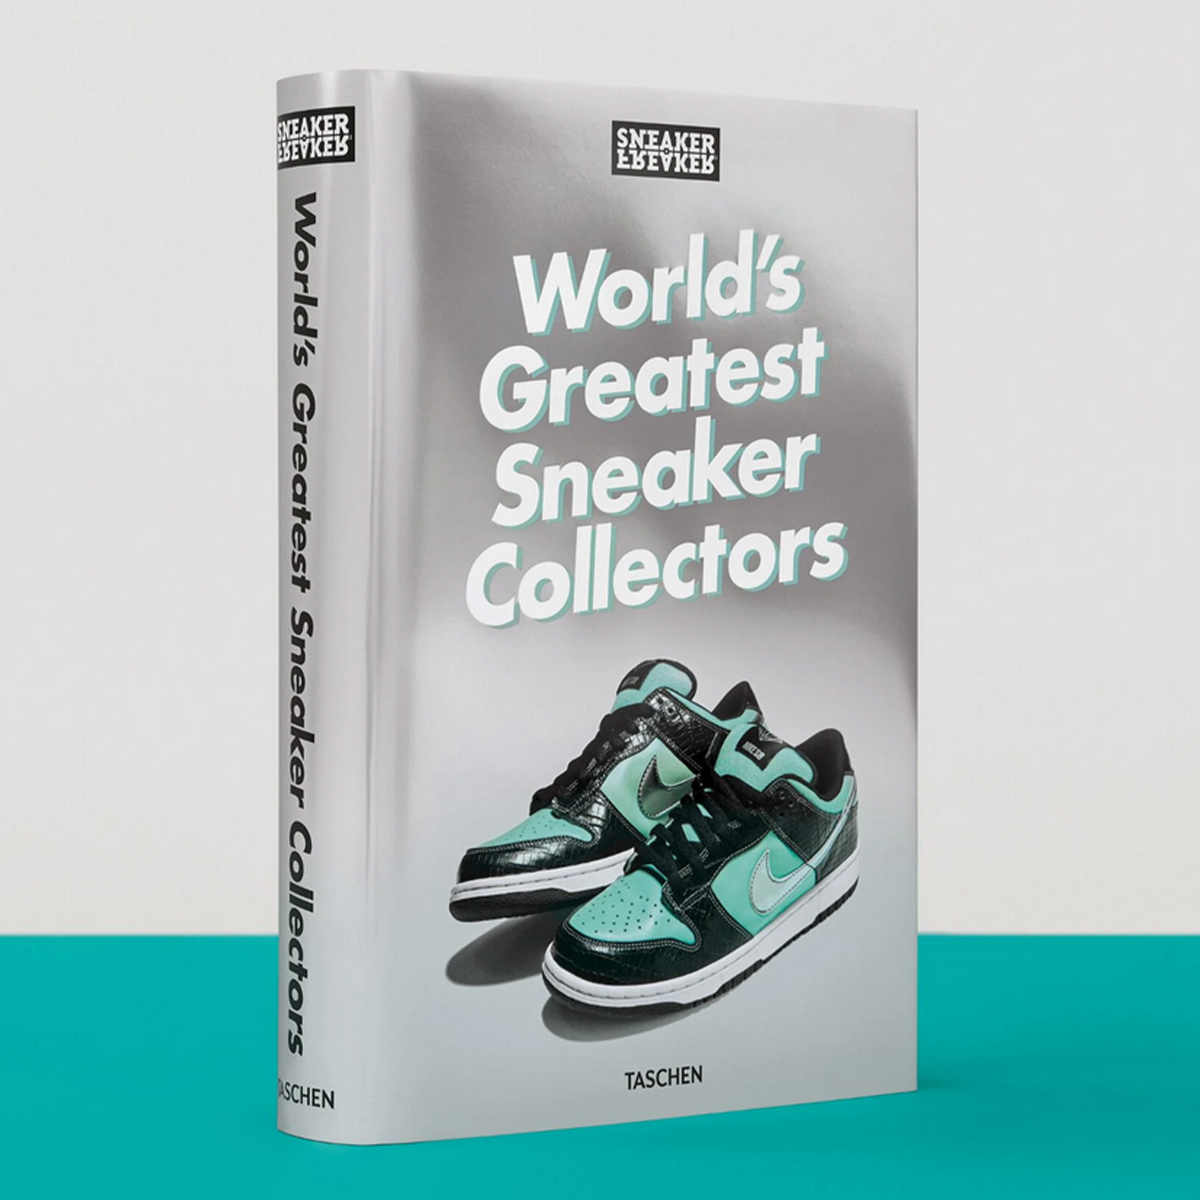 Sneaker Freaker. The Ultimate Sneaker Book - relié - Simon Wood